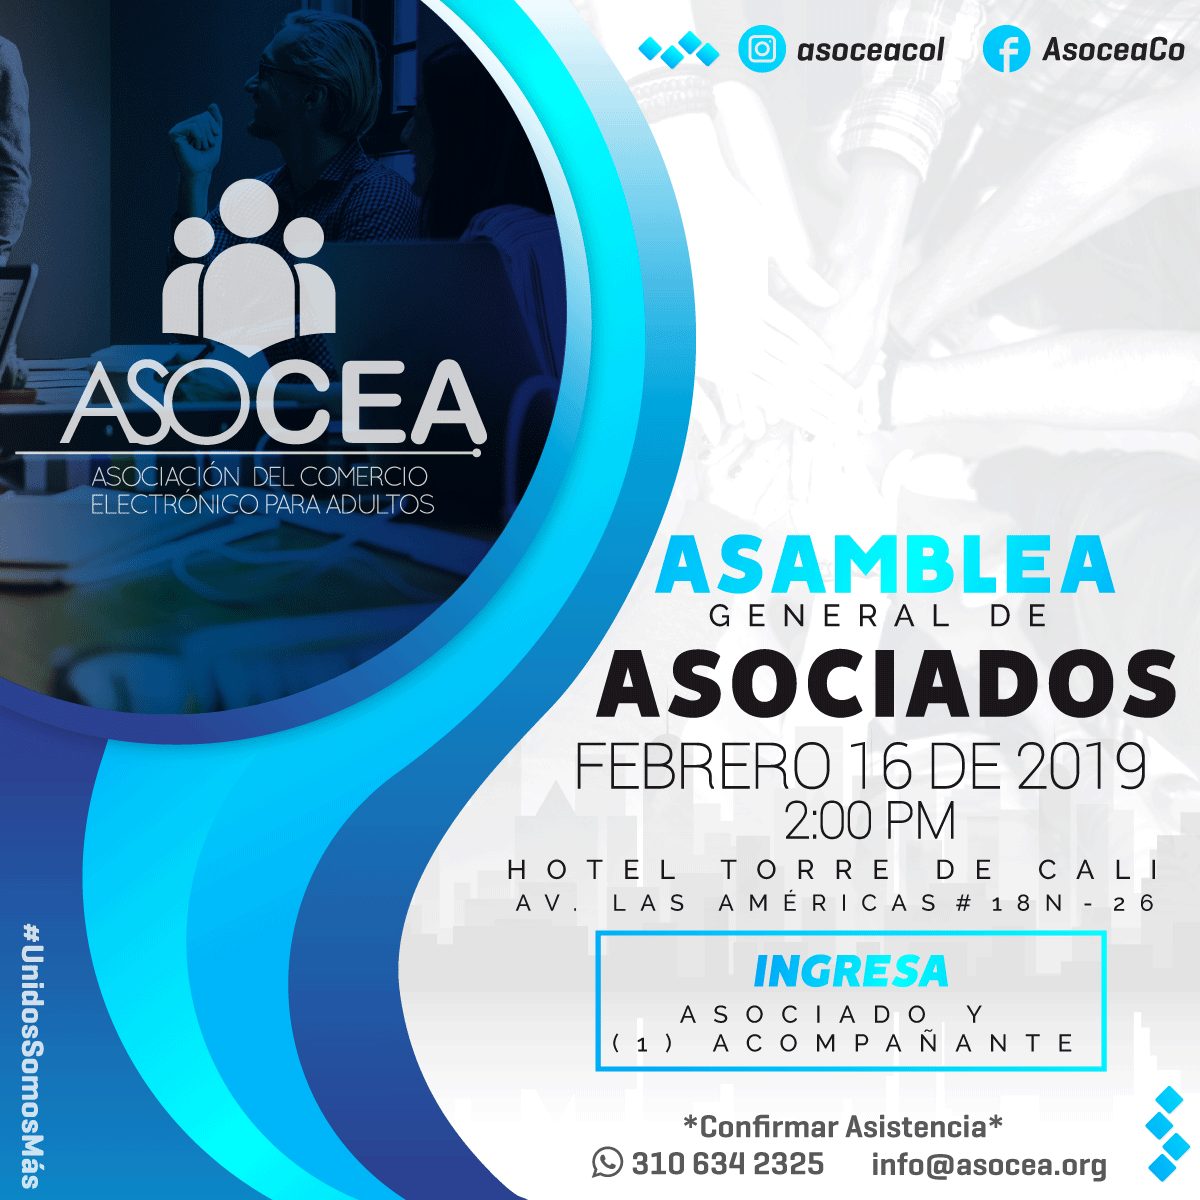 Asamblea general de Asociados ASOCEA MaJu Studios